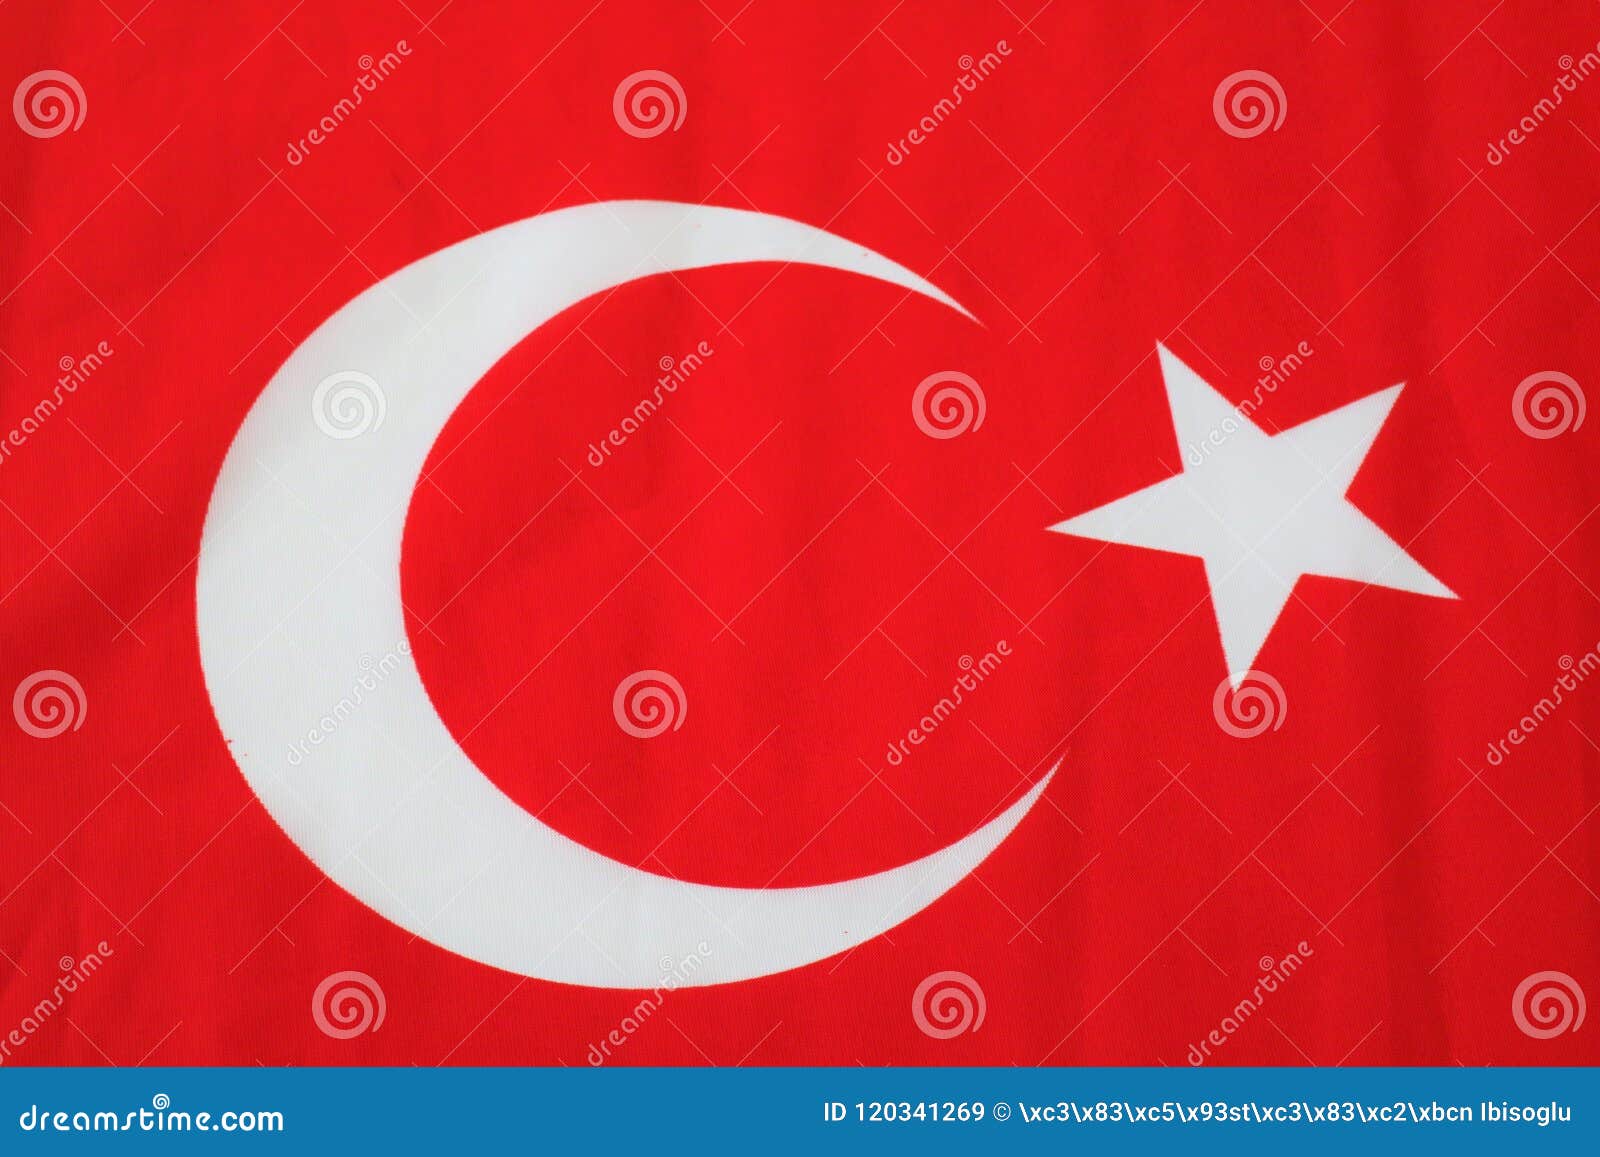 Turkish Flag. Turkish Red Flag with White Moon. National Flag of Turkey Stock Image - Image of landmark, moon: